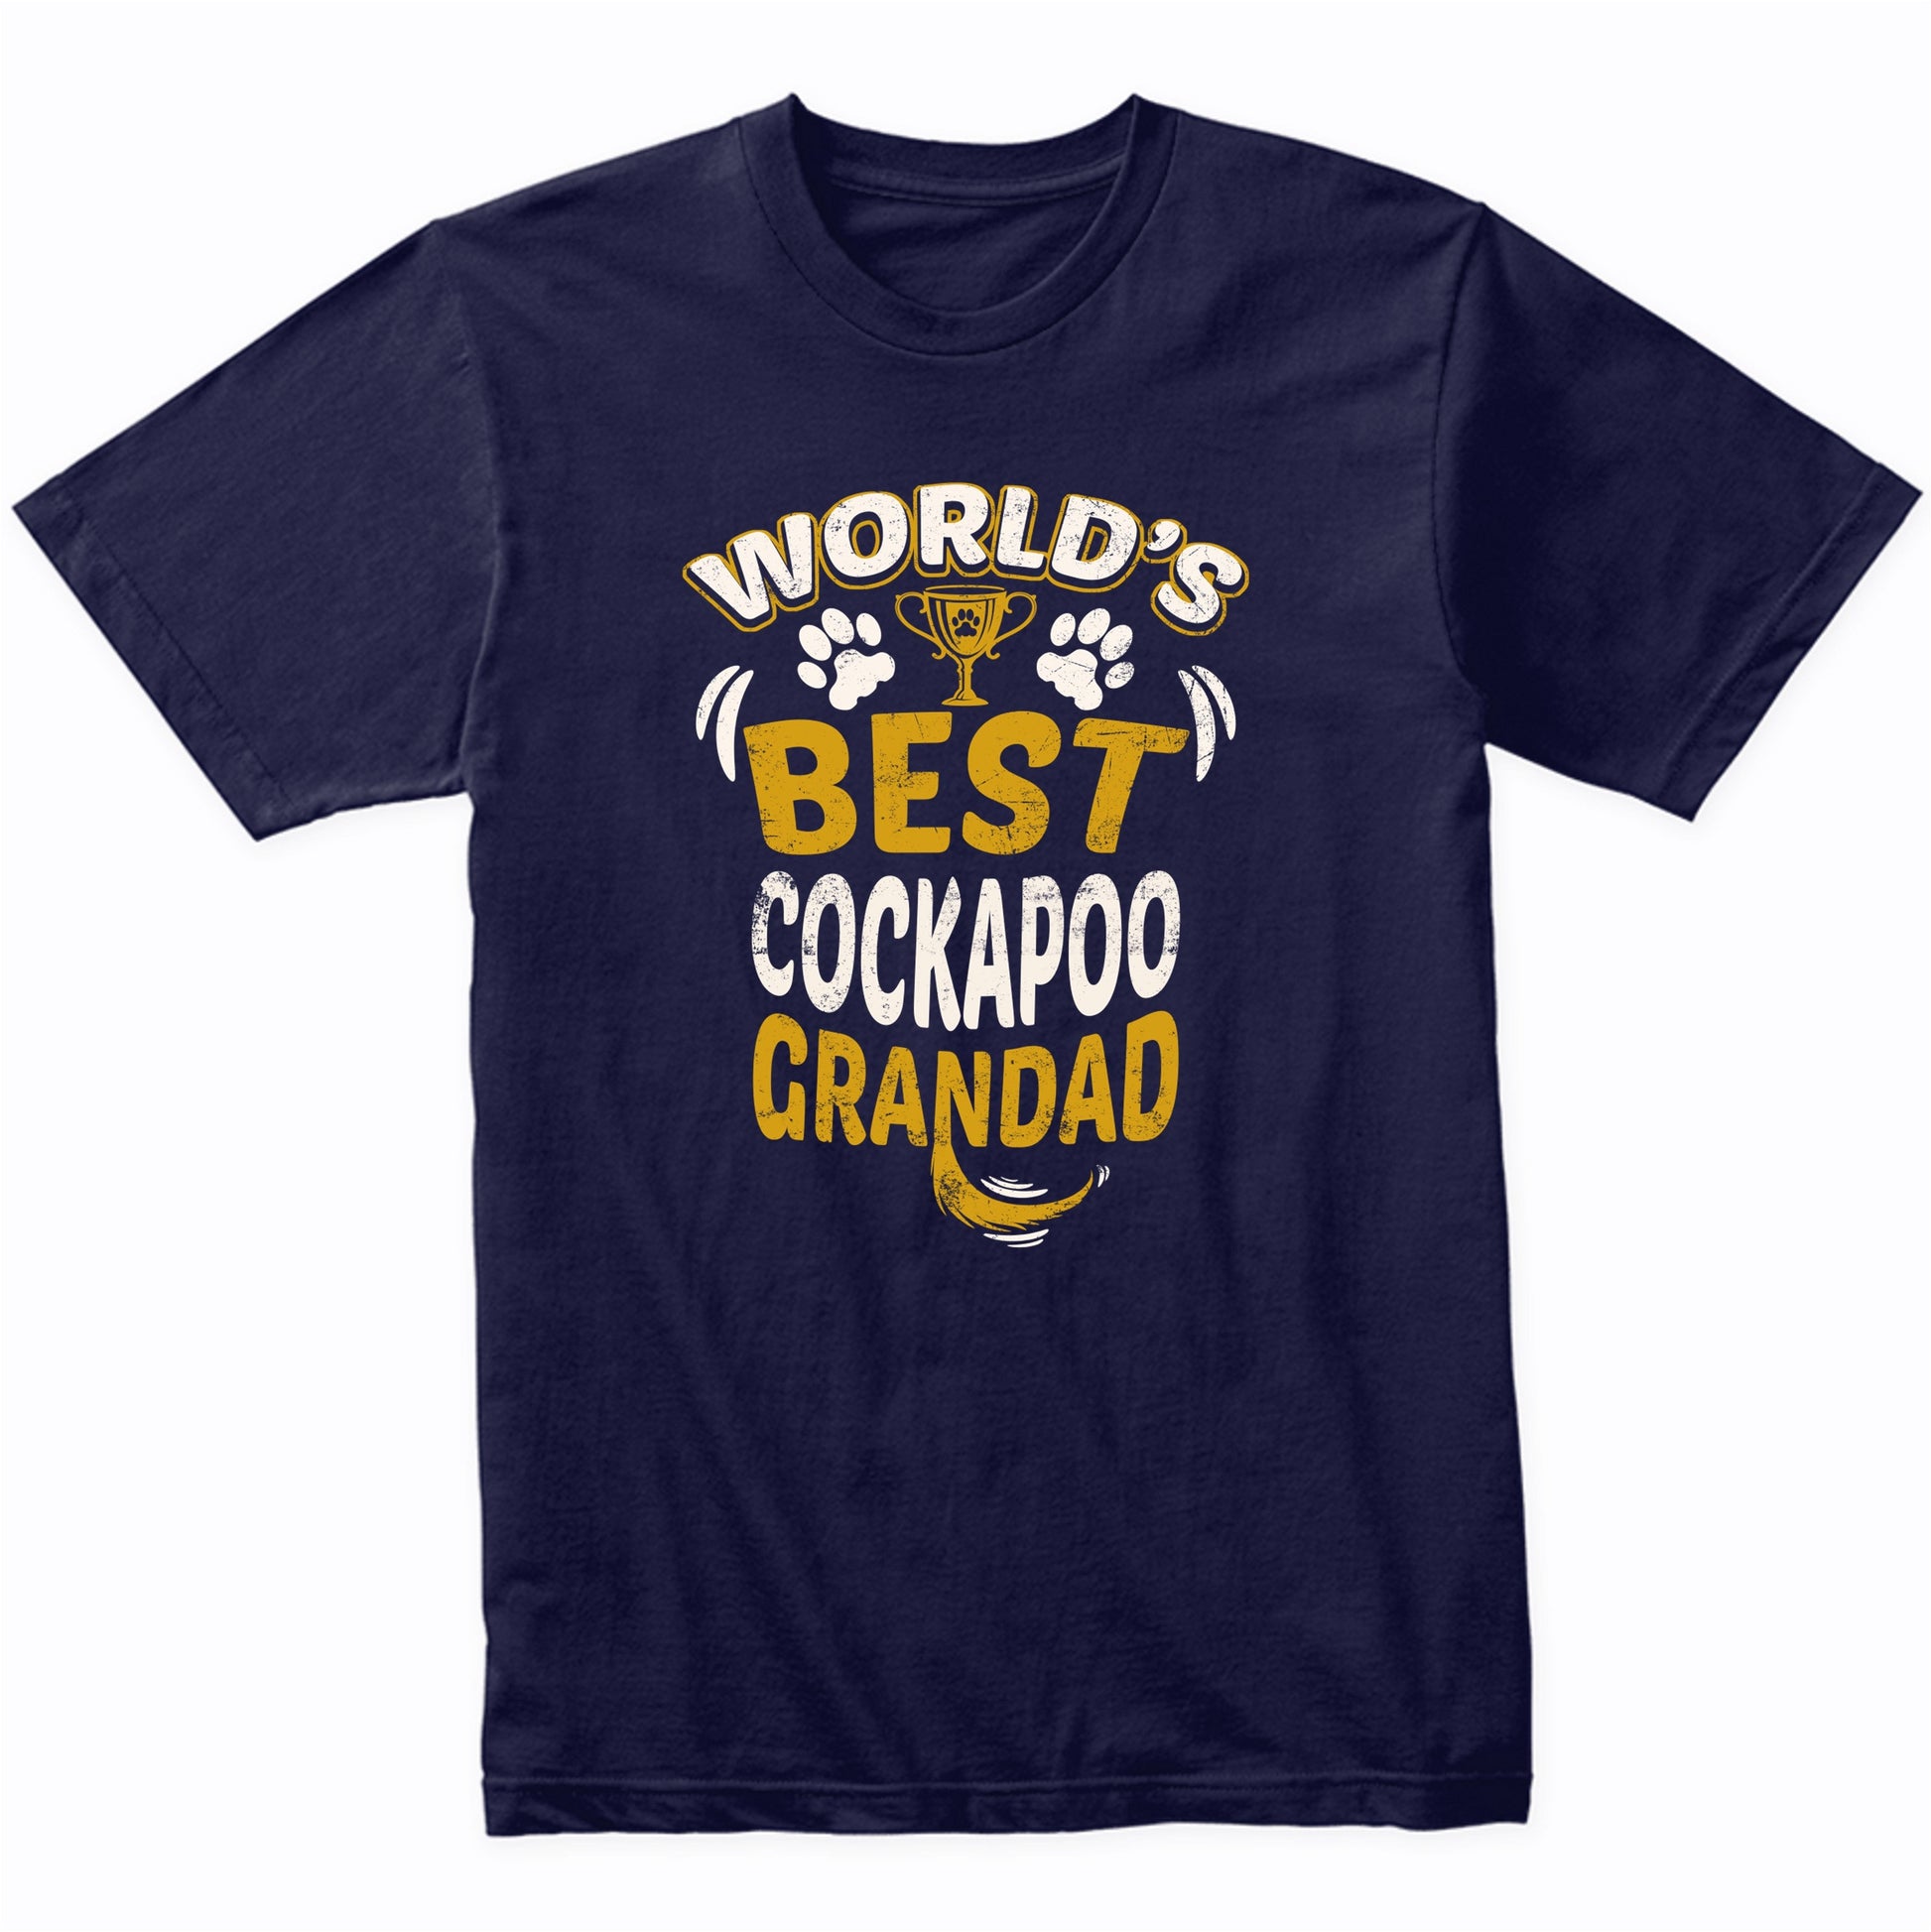 World's Best Cockapoo Grandad Graphic T-Shirt